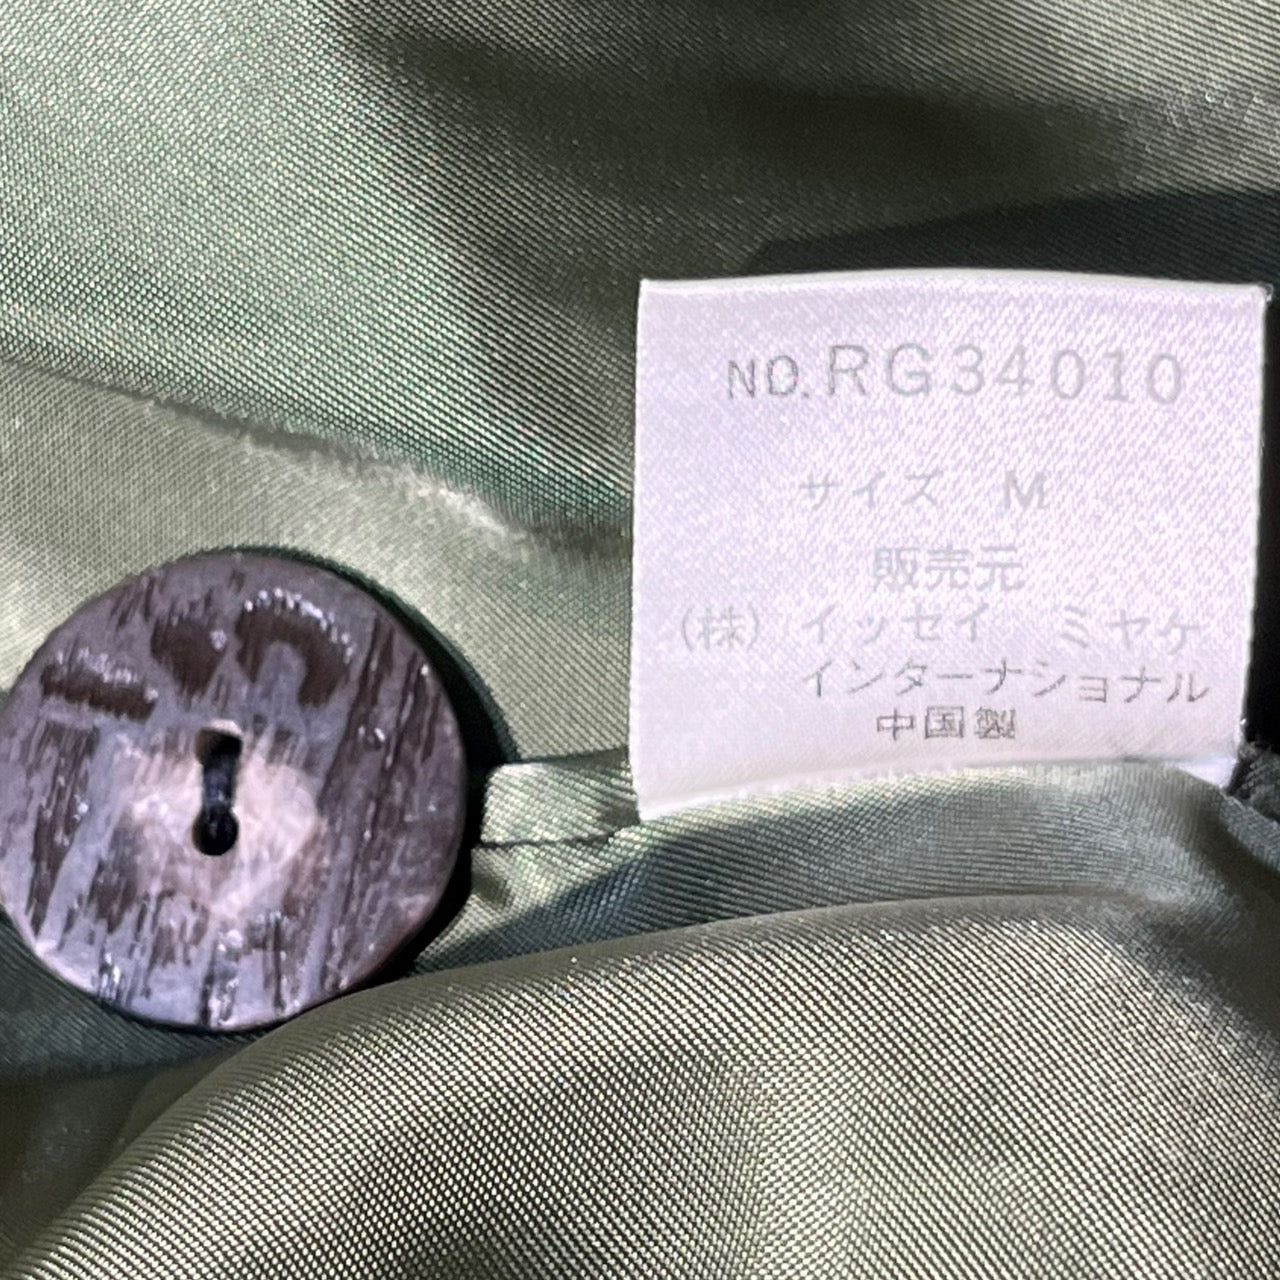 i.s. ISSEY MIYAKE(アイエス イッセイミヤケ) 80's Mexican stitch woolj acket/メキシカンステッチウールジャケット RG34010 M（メンズサイズ） グリーン